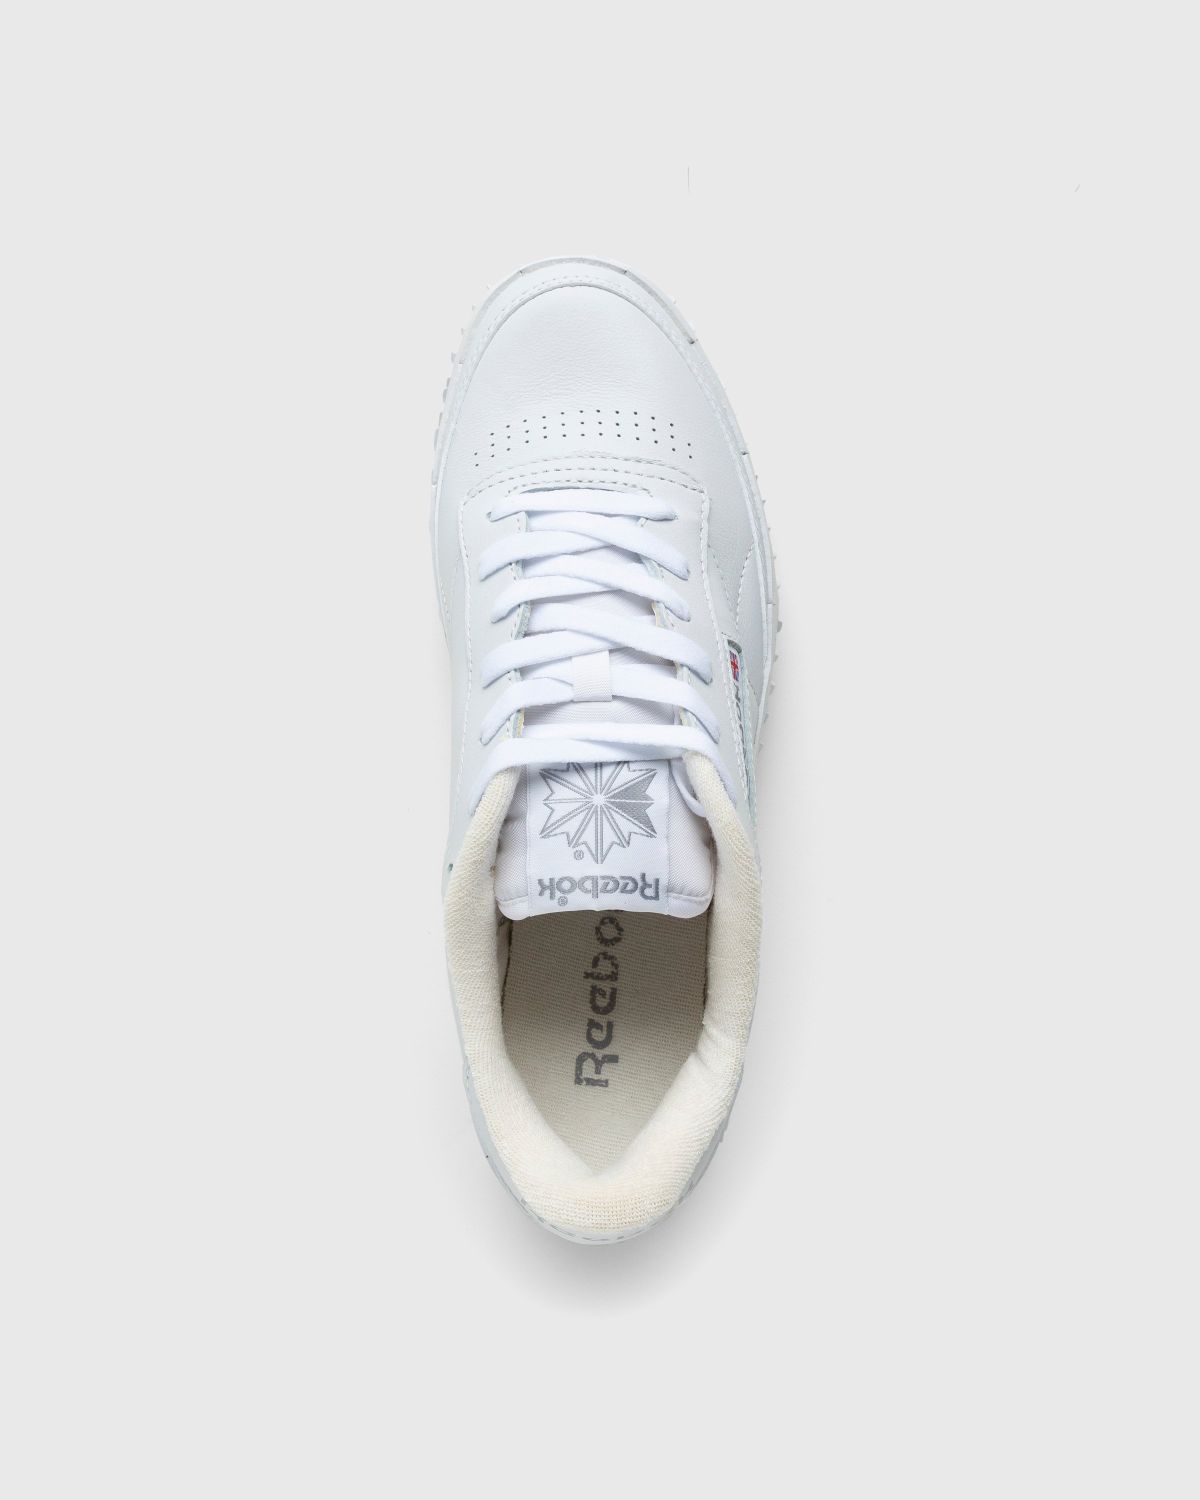 Reebok – Club C Vibram White - Low Top Sneakers - White - Image 5